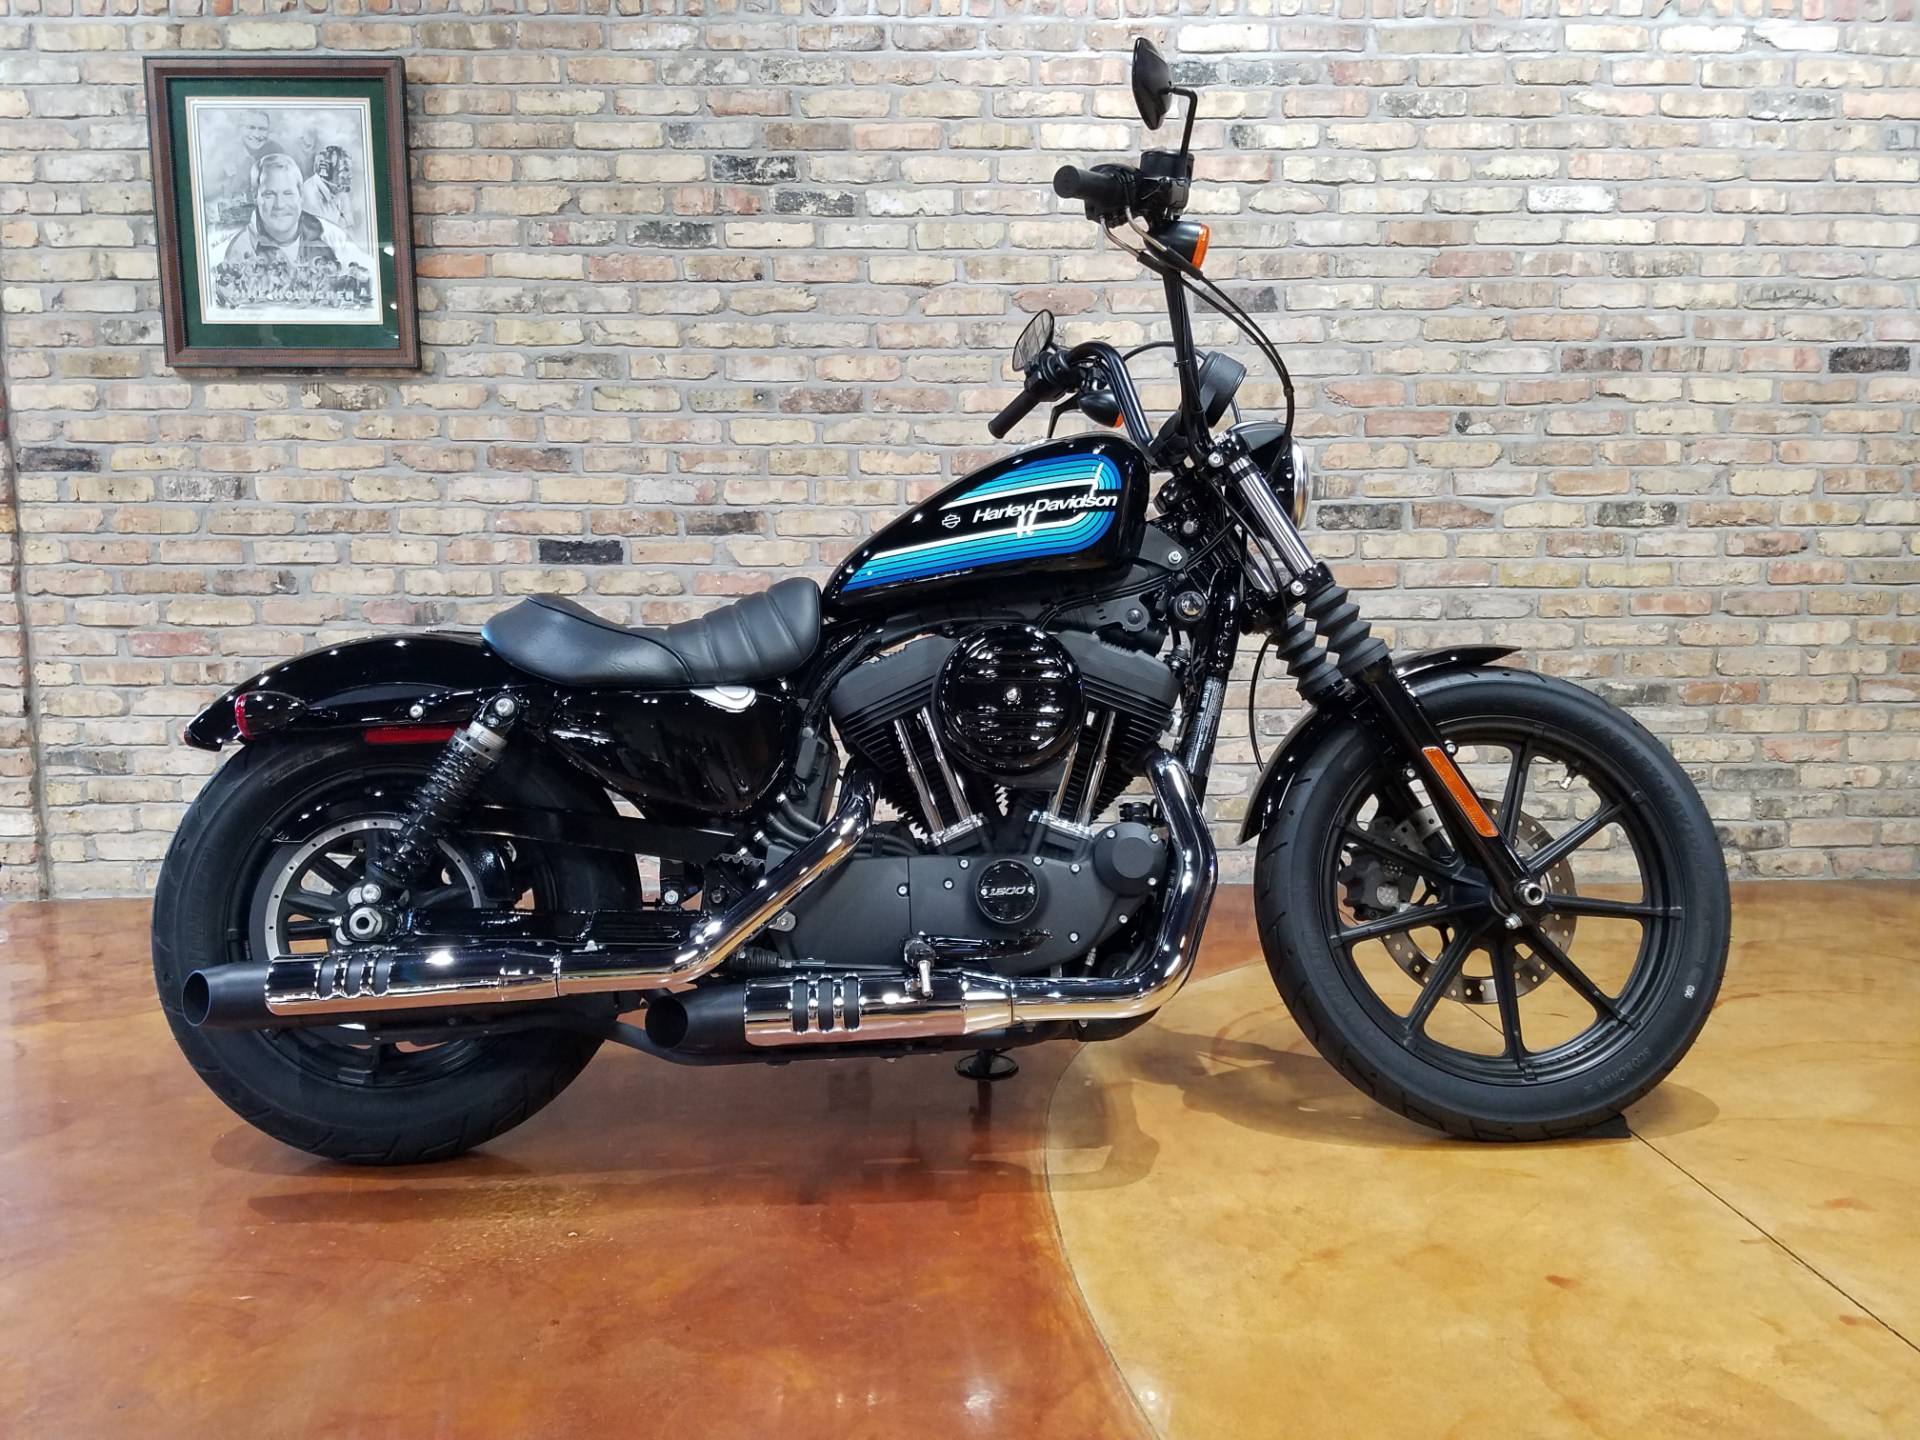 Used 2019 Harley Davidson Iron 1200 Motorcycles In Big Bend Wi 4267 Vivid Black